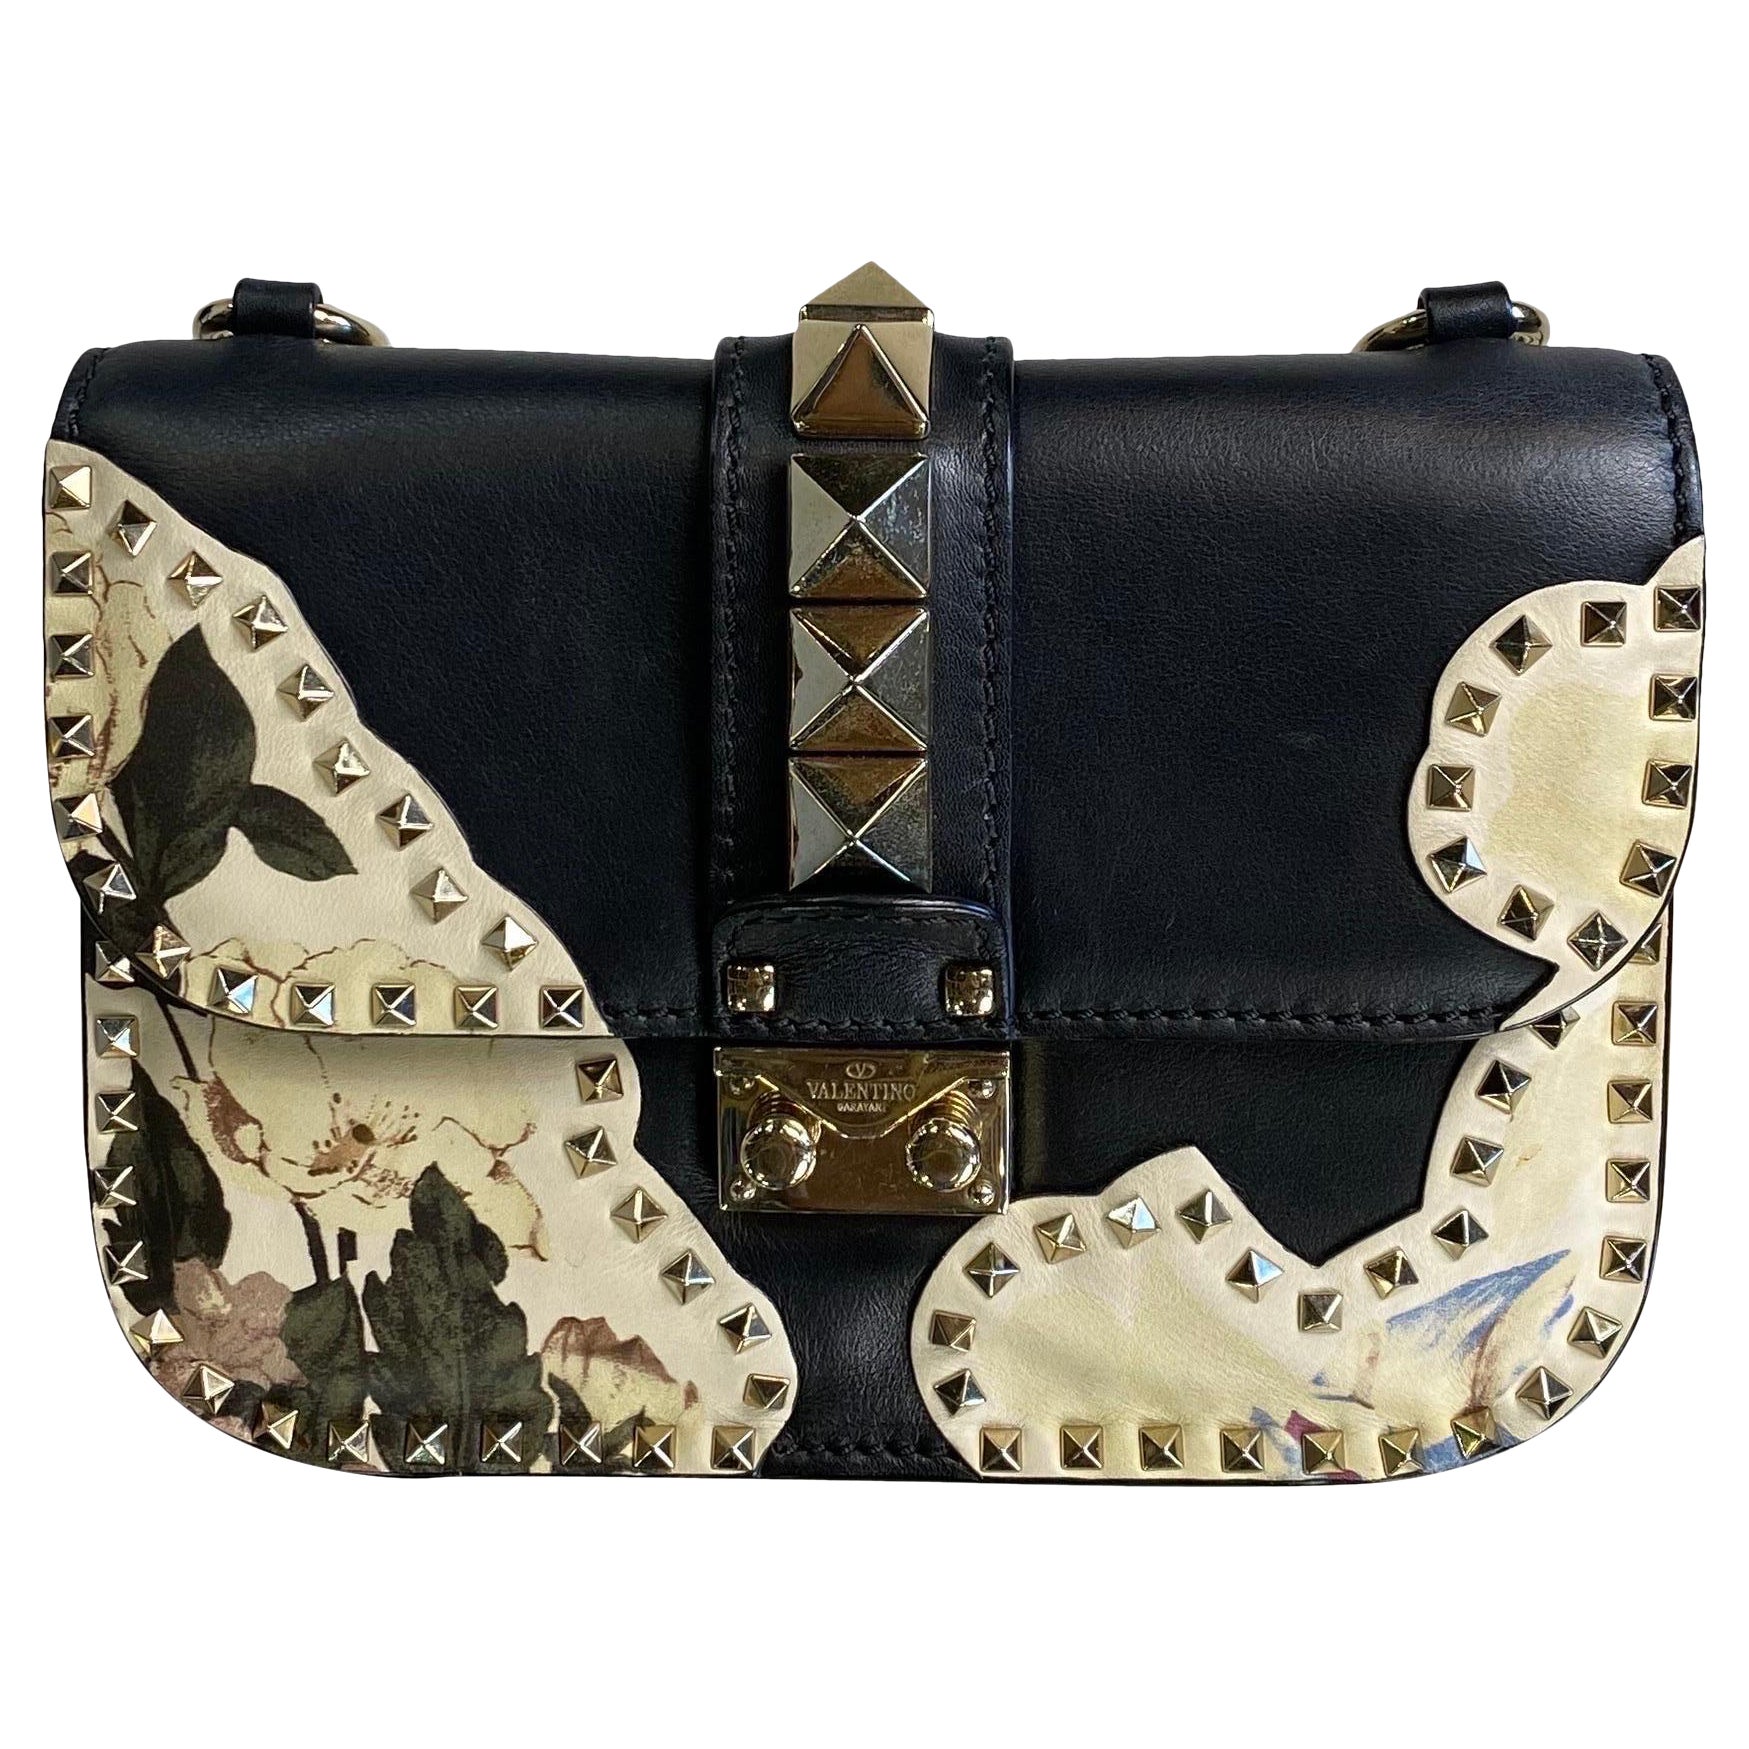 Valentino Garavani Kimono Black Leather Floral Bag For Sale